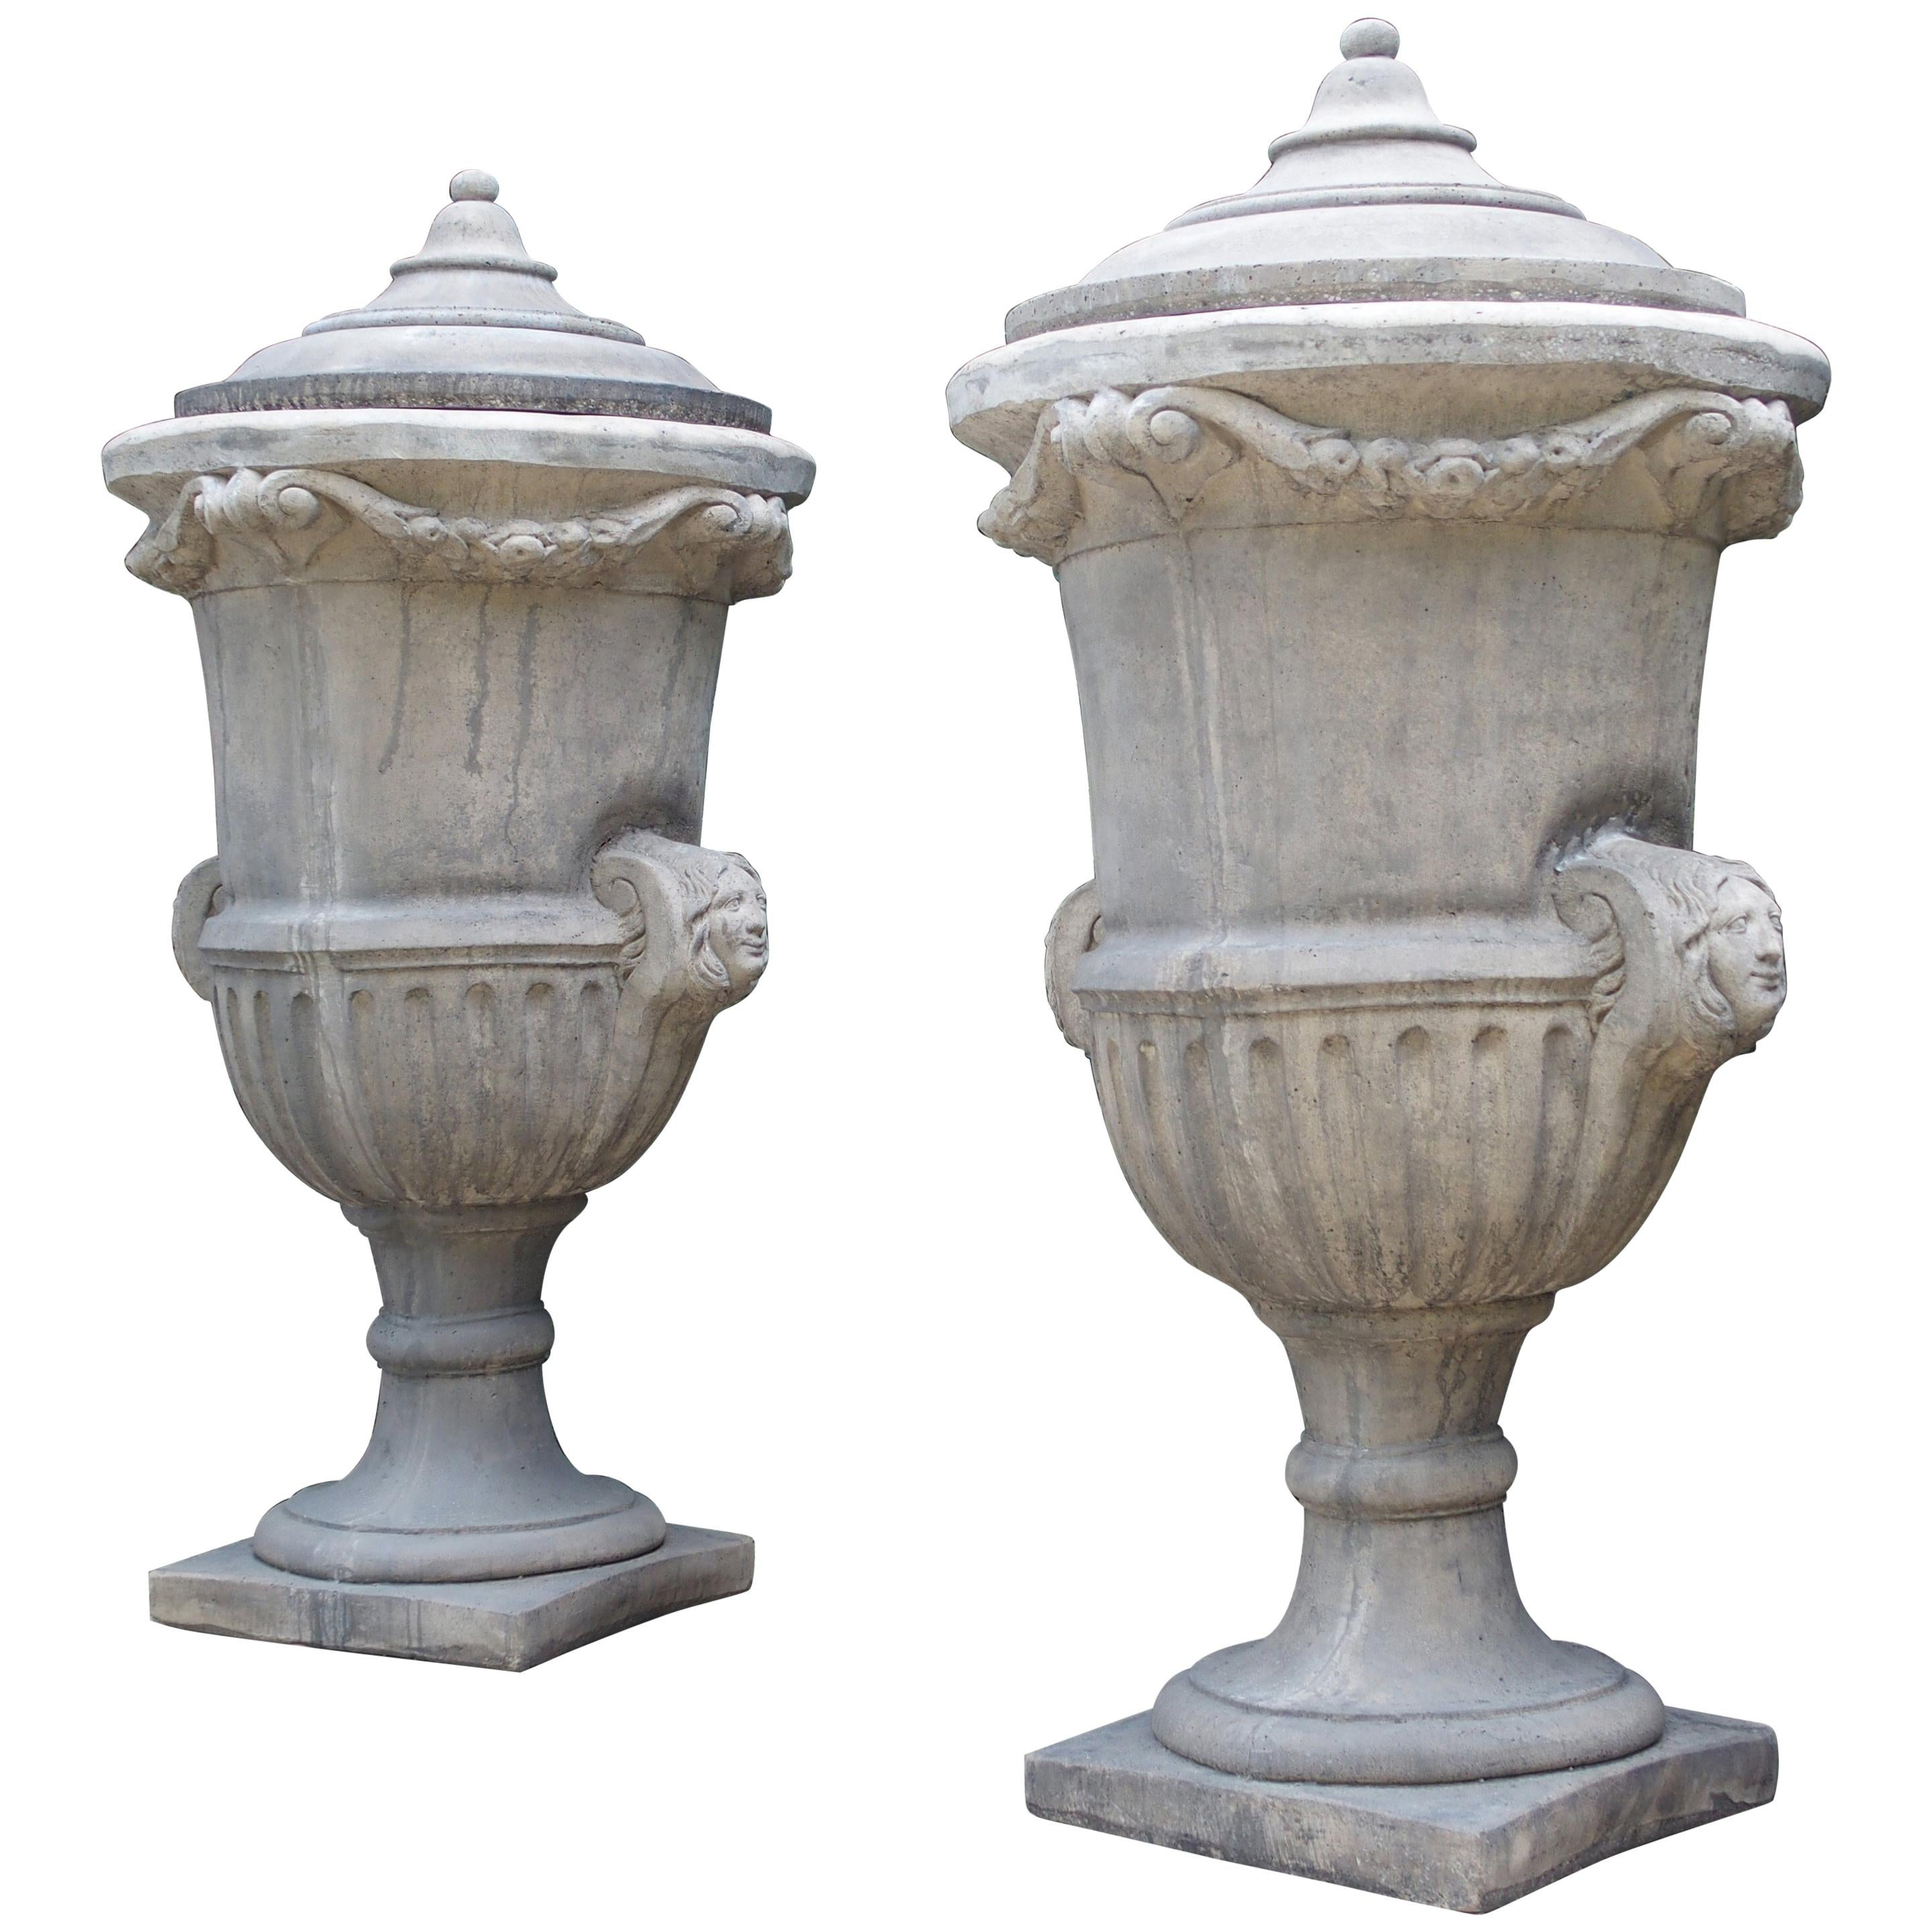 Pair of Tall Cast Stone Lidded Garden Vases from Belgium